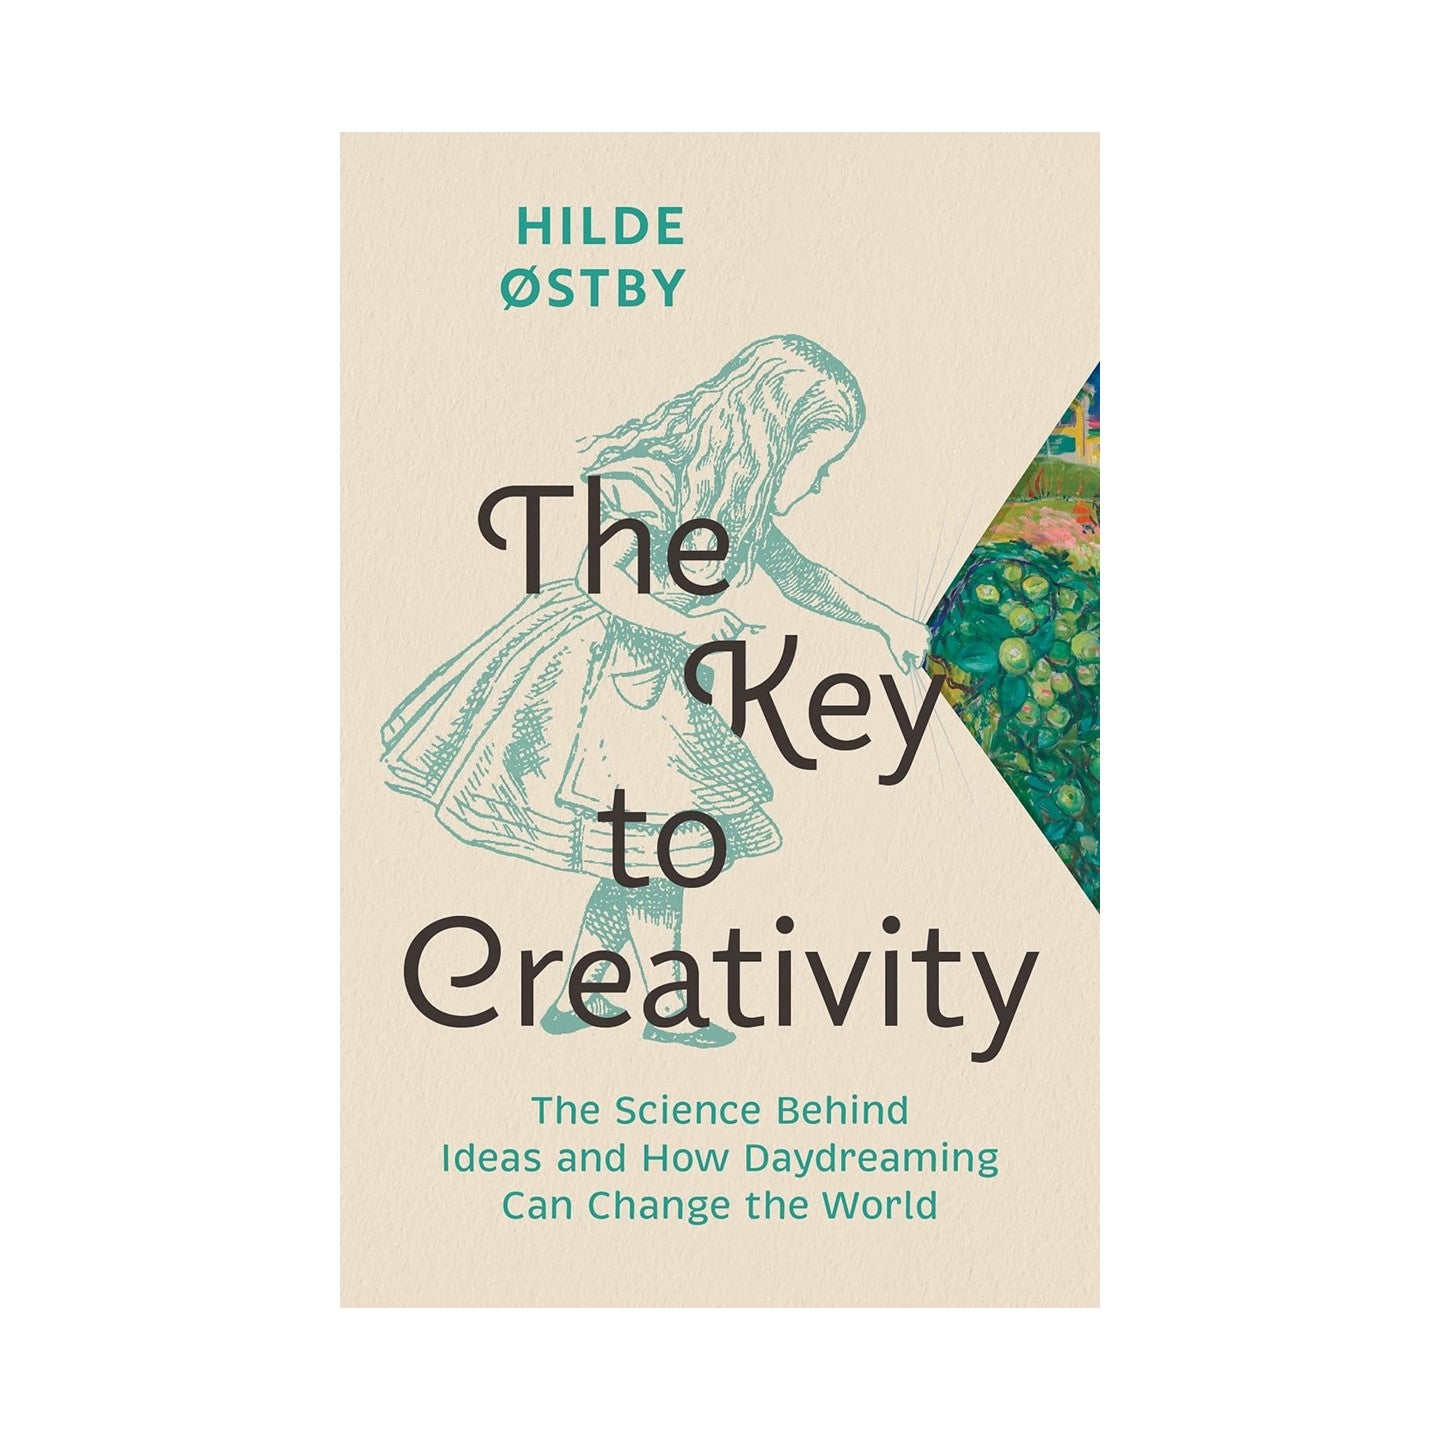 The Key to Creativity by Hilde Østby